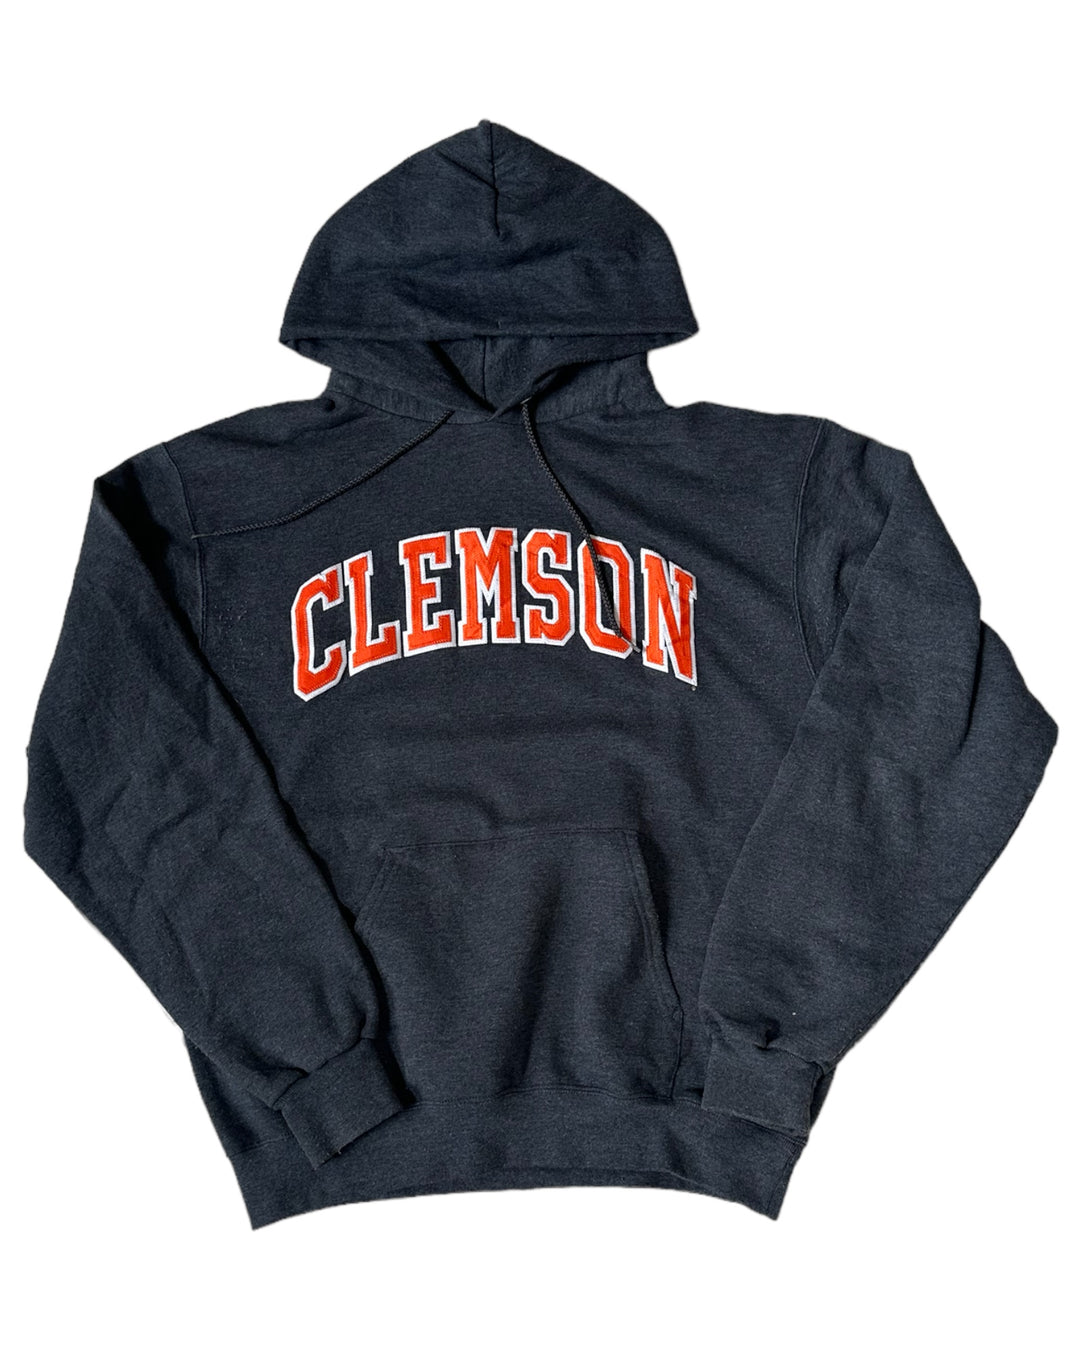 Clemson Vintage Sweatshirt